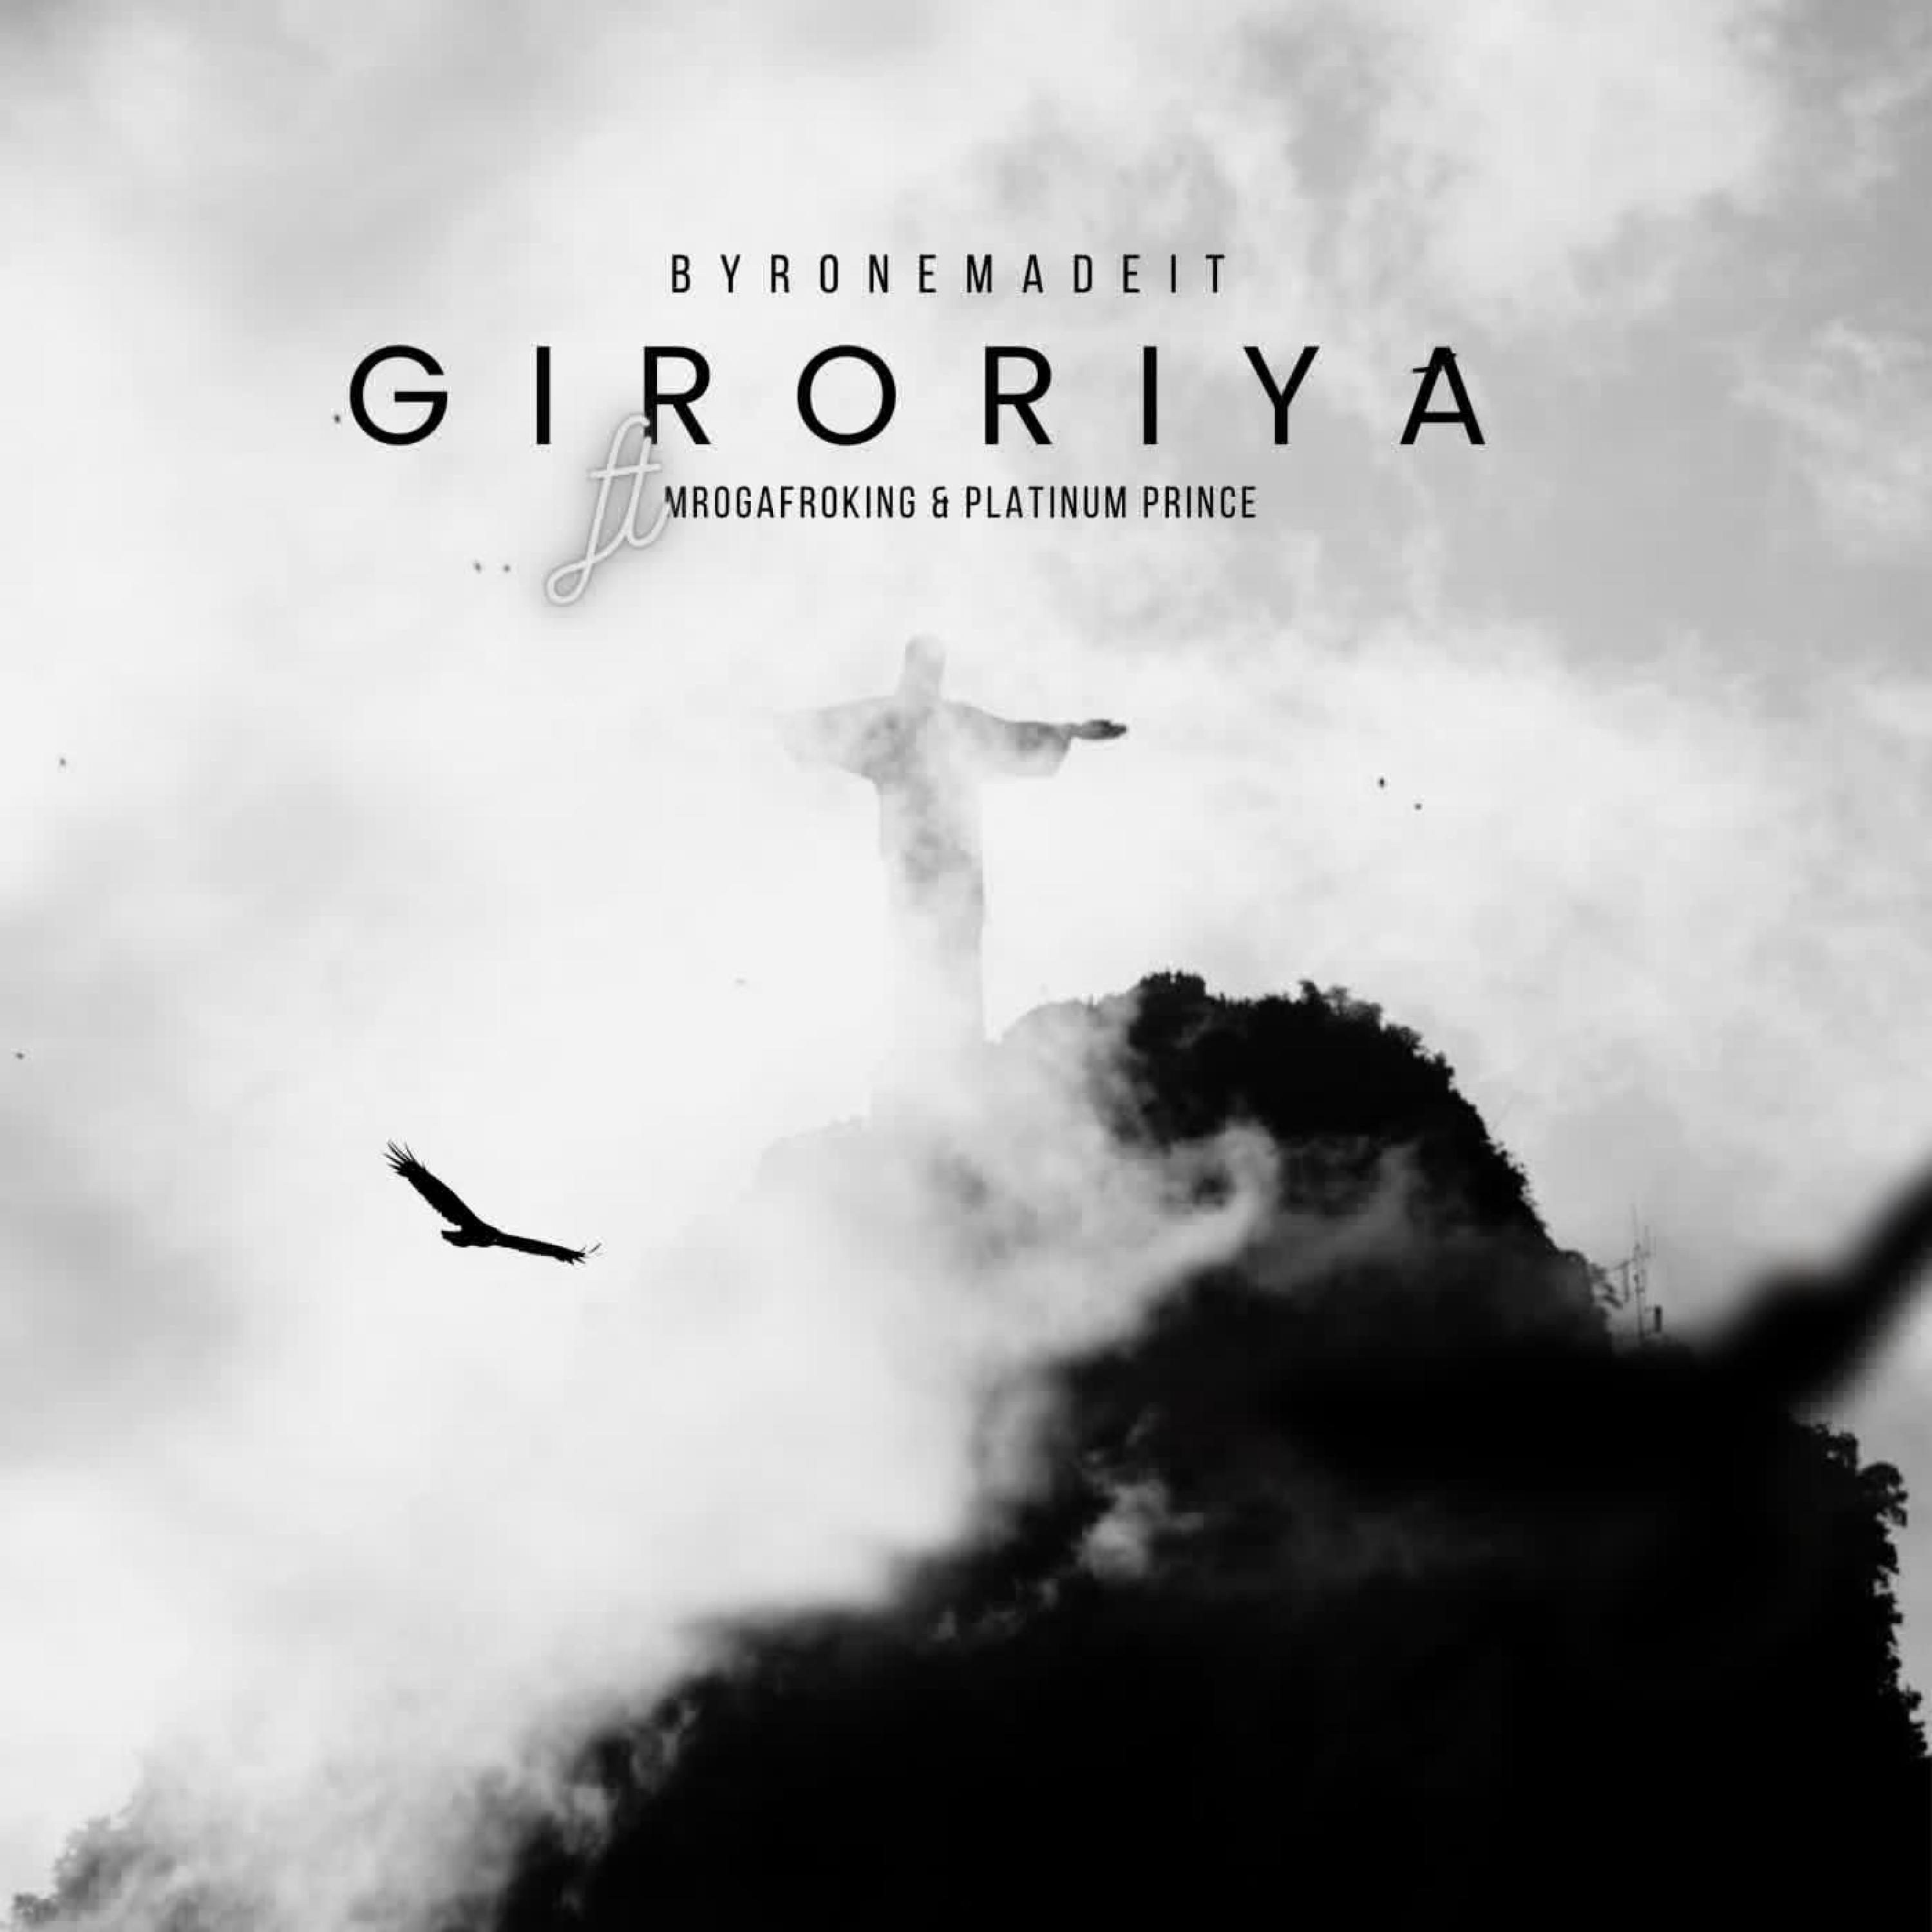 Platinum Prince - GIRORIYA /GLORIA (feat. Byronemadeit & Mr O.G Afroking)